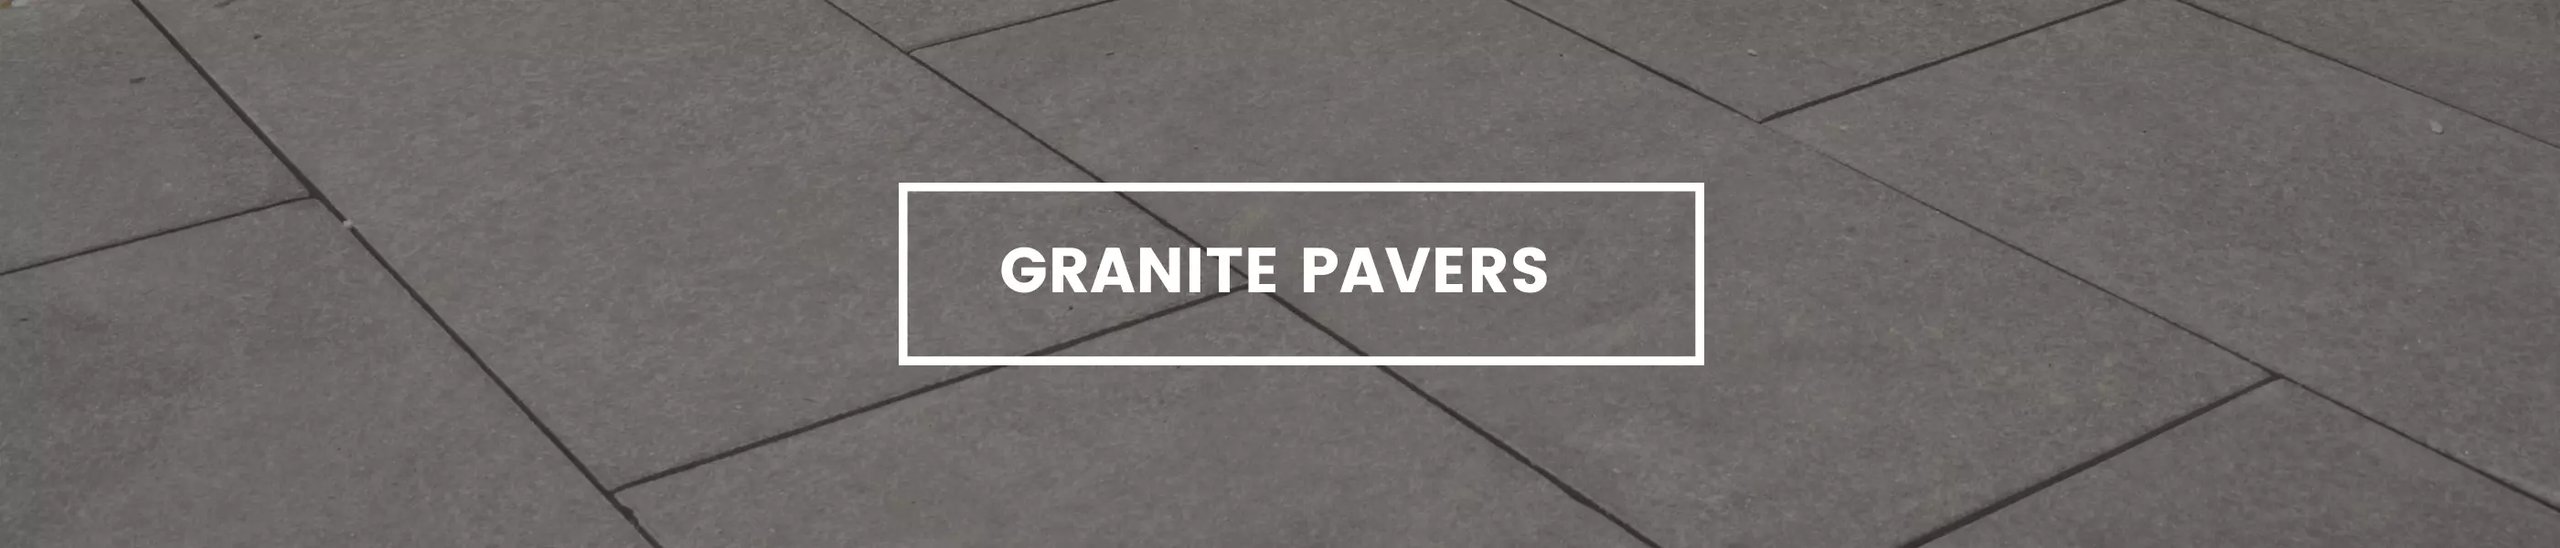 Granite pavers banner for desktop.